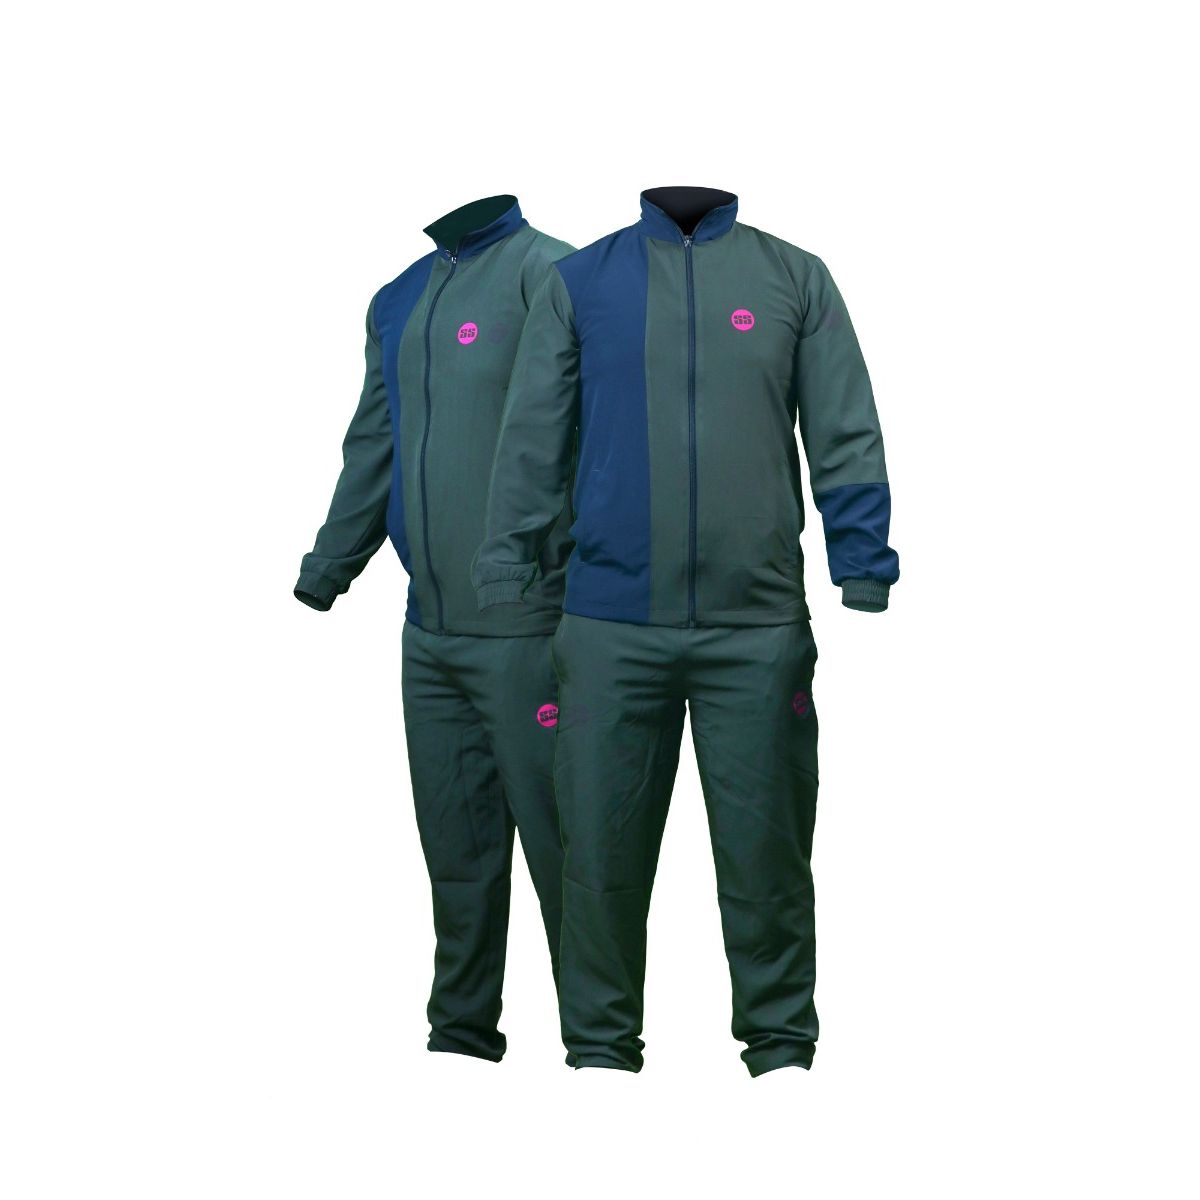 SS Pro super Zipper Sports Gym Track Suit Set for men's and boy's ...